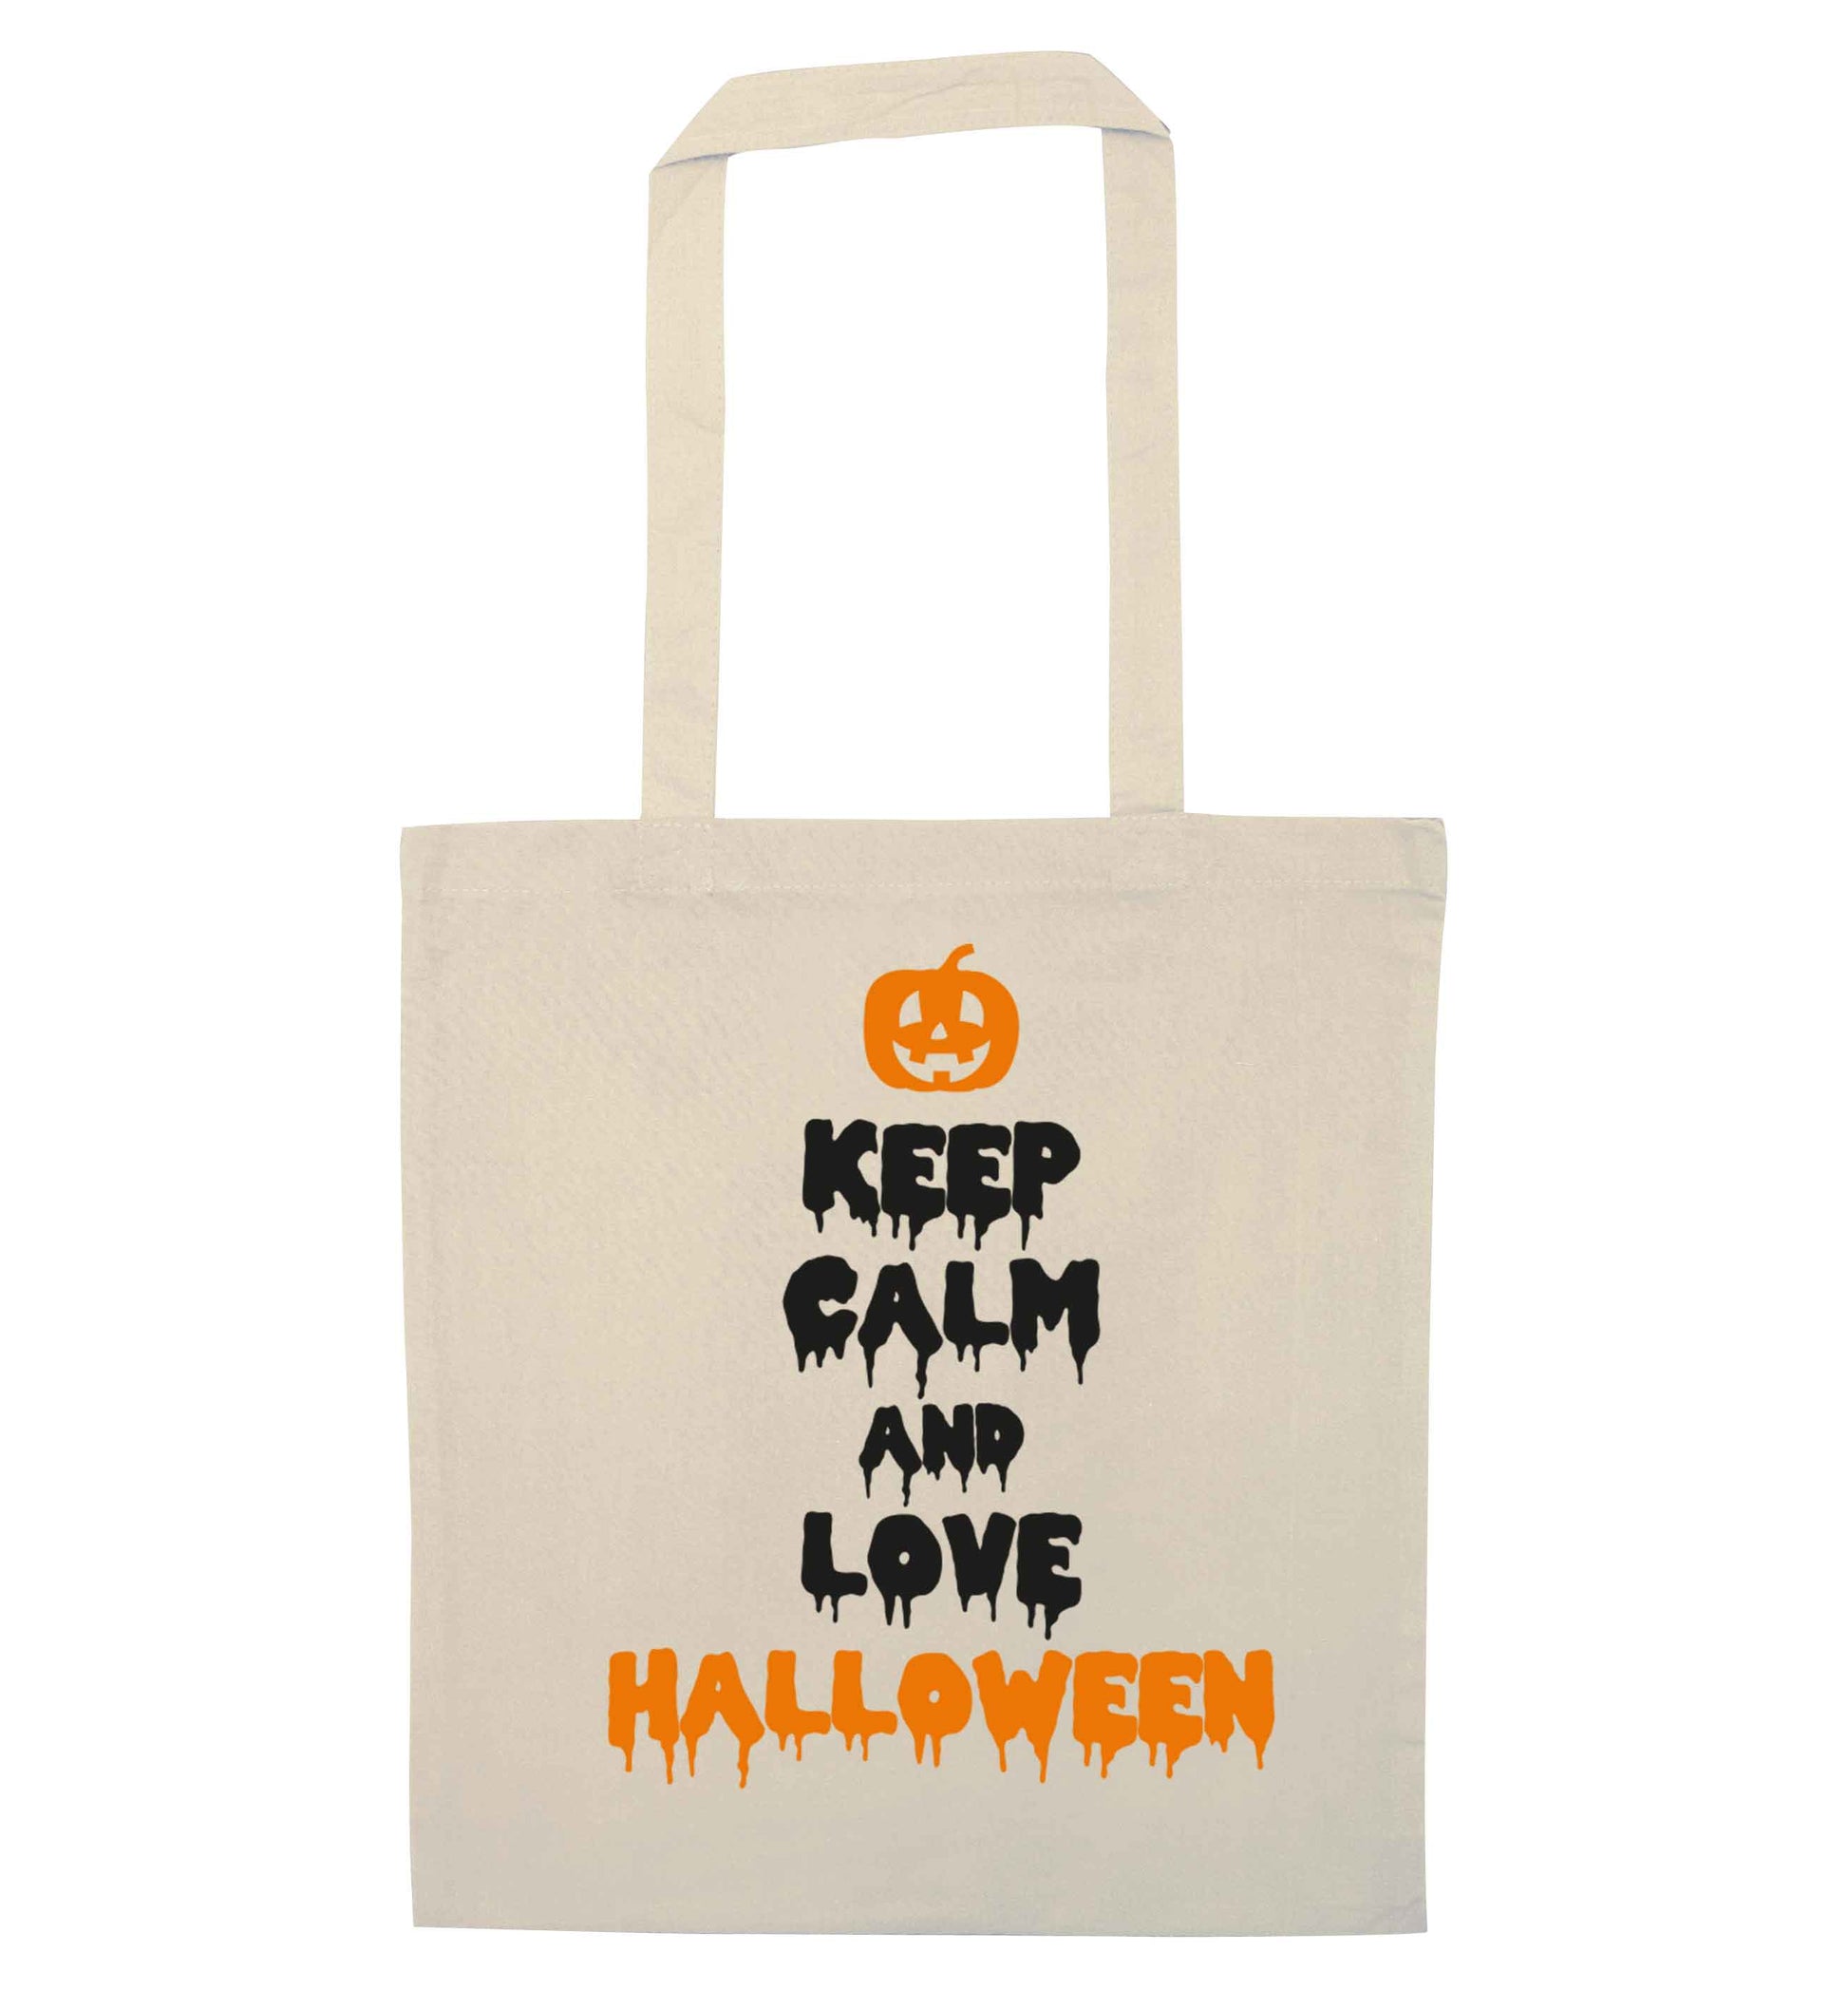 Keep calm and love halloween natural tote bag